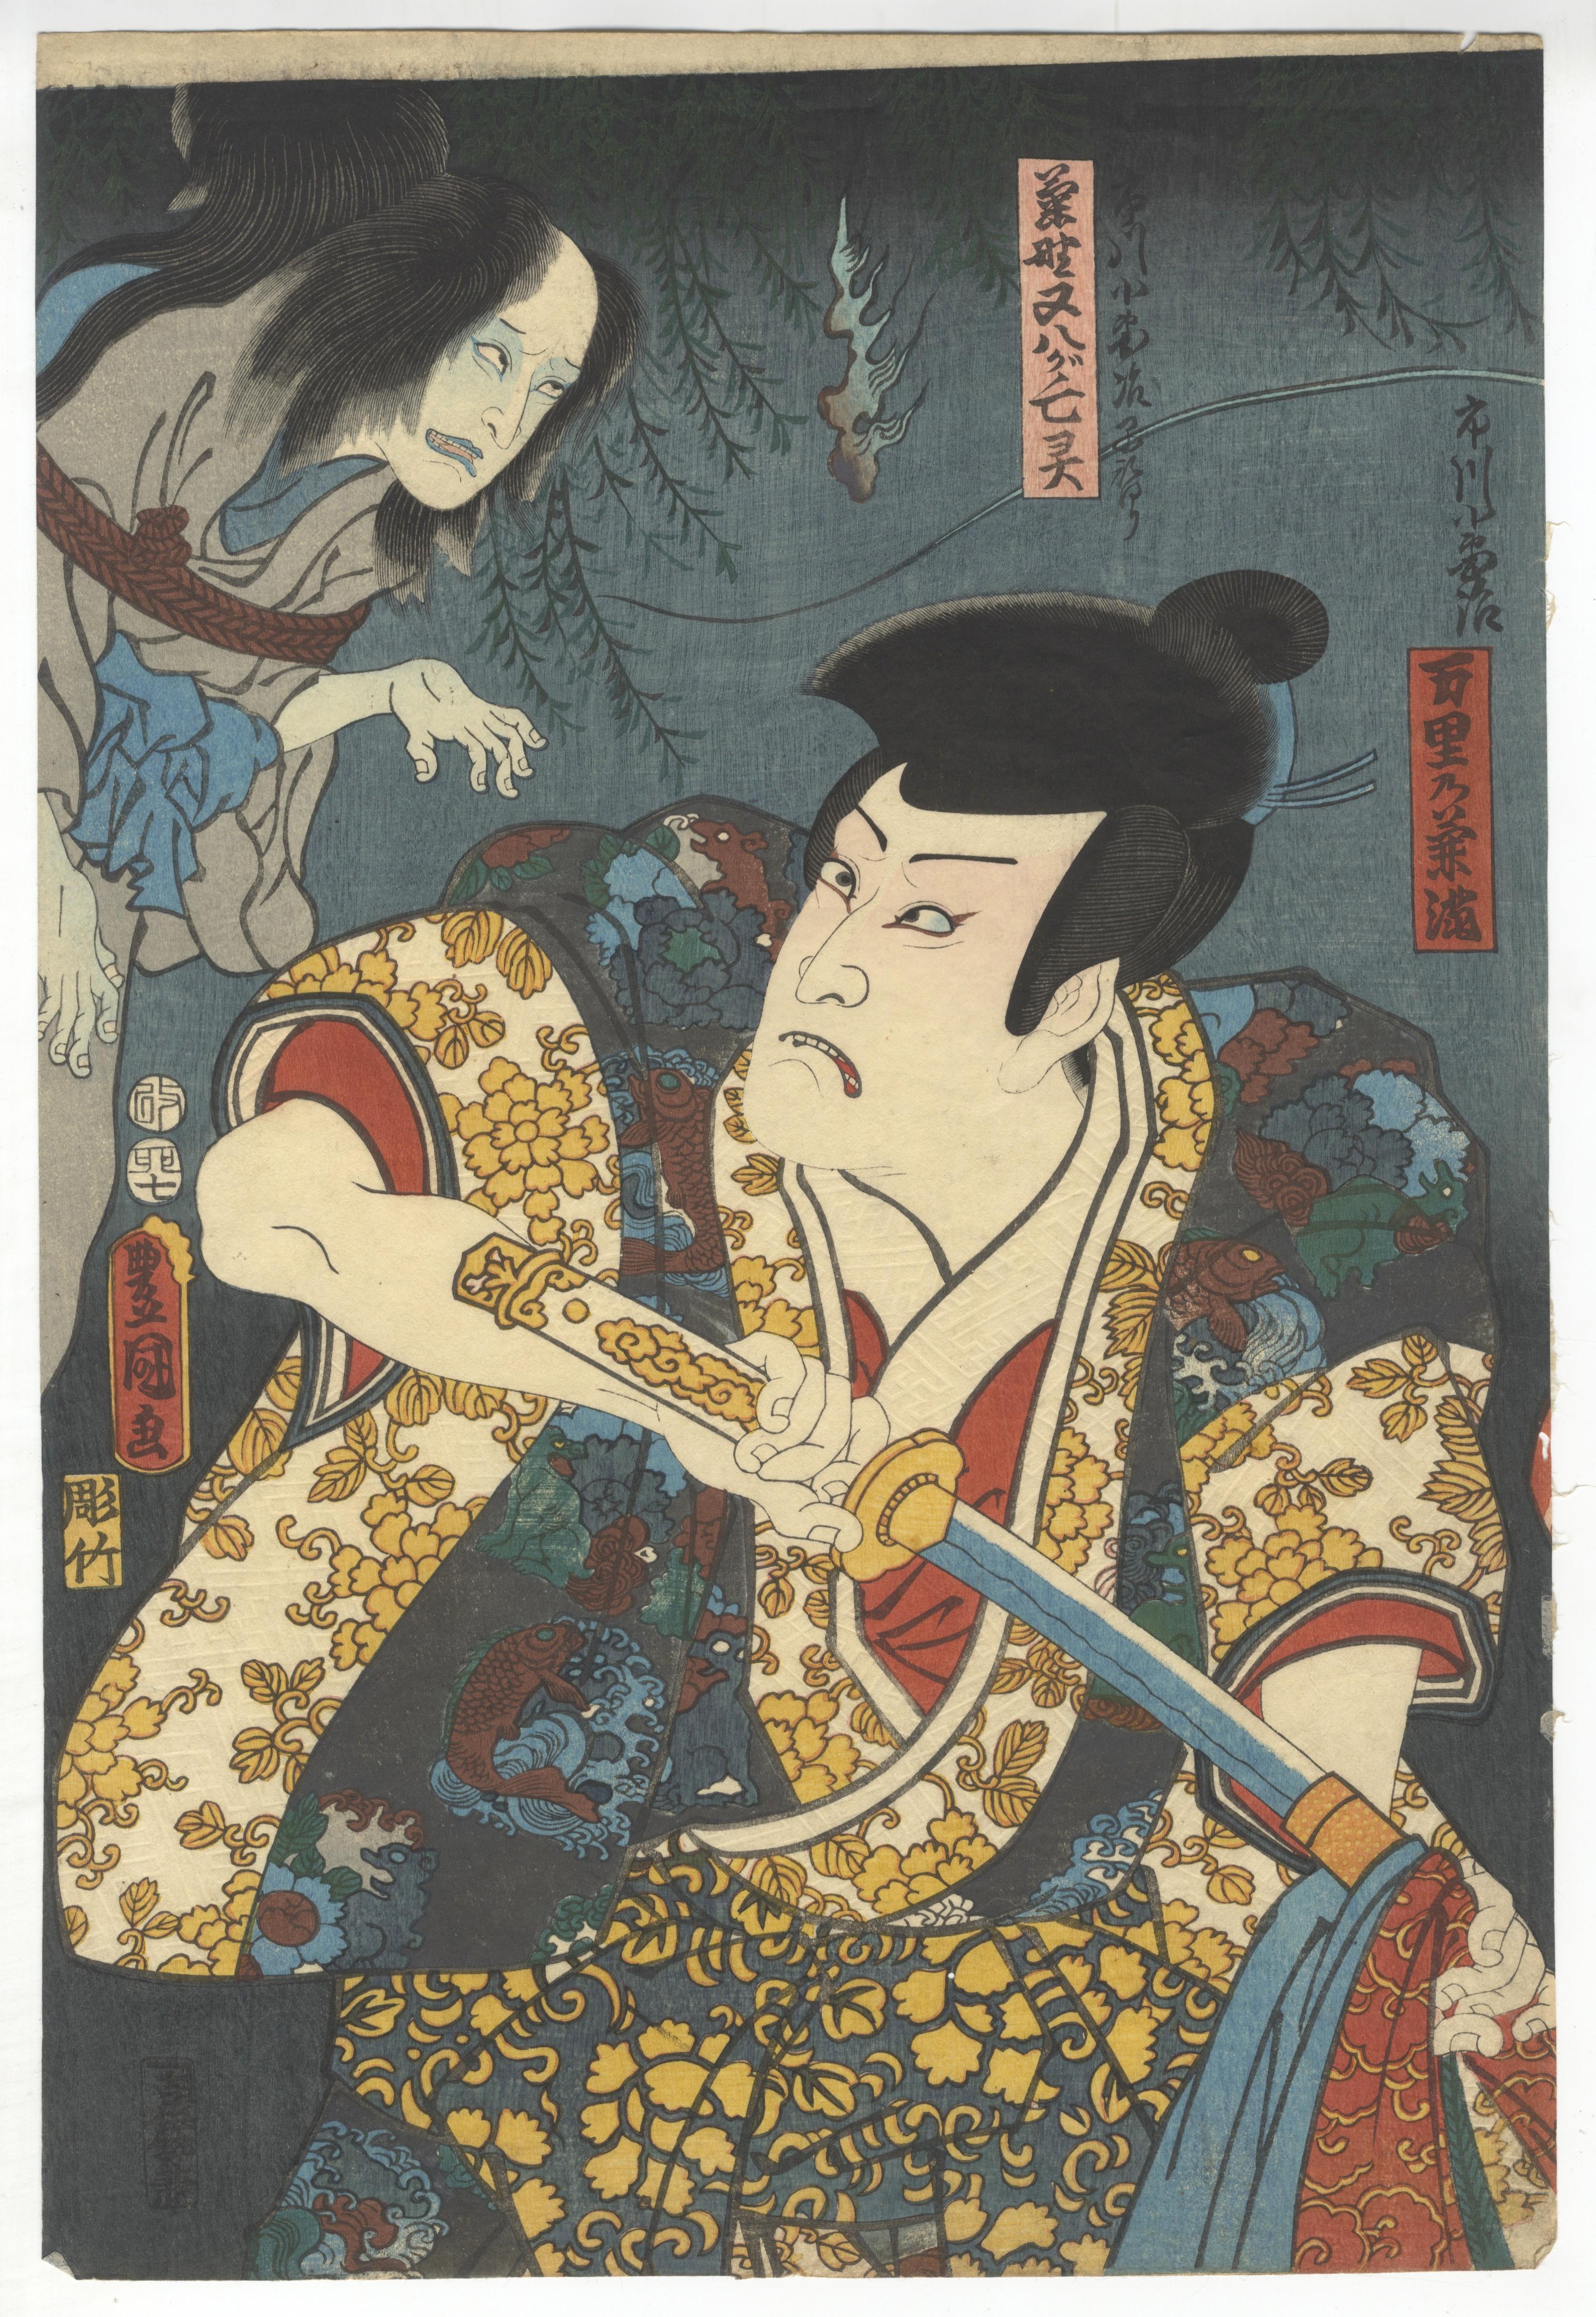 Artist: Utagawa Toyokuni III (1786-1864)
Title: Ghost of Kamada Matahachi and Kikuno
Publisher: Isekane Kichi
Date: 1855
Measures: (L) 24.9 x 36.8, (R) 24.9 x 36.8

The drama begins when Kanemitsu sleeps with his brother's widow Kyodai, who